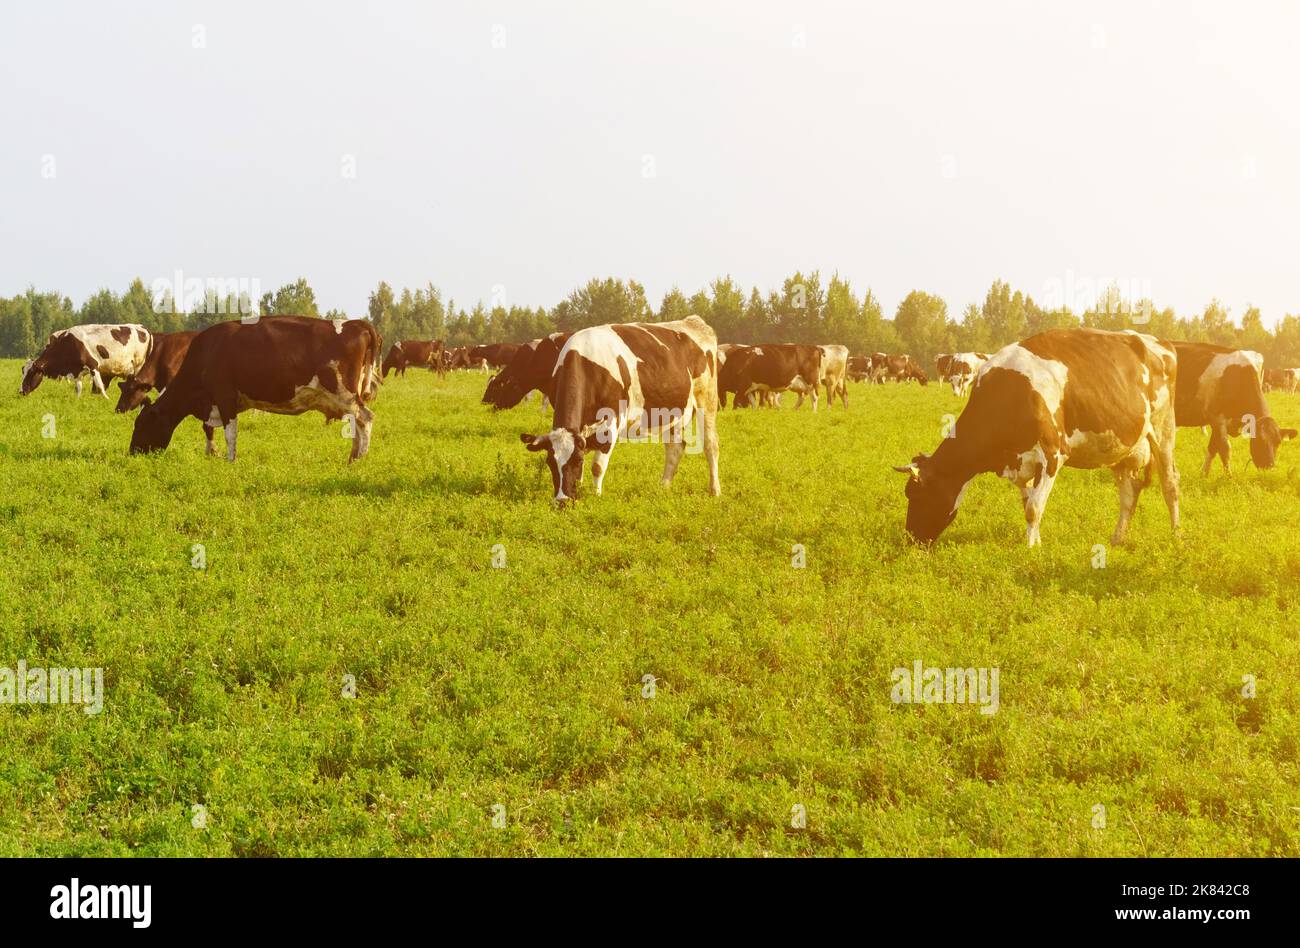 Livestock raising. A herd of cows graze in the field. Stock Photo